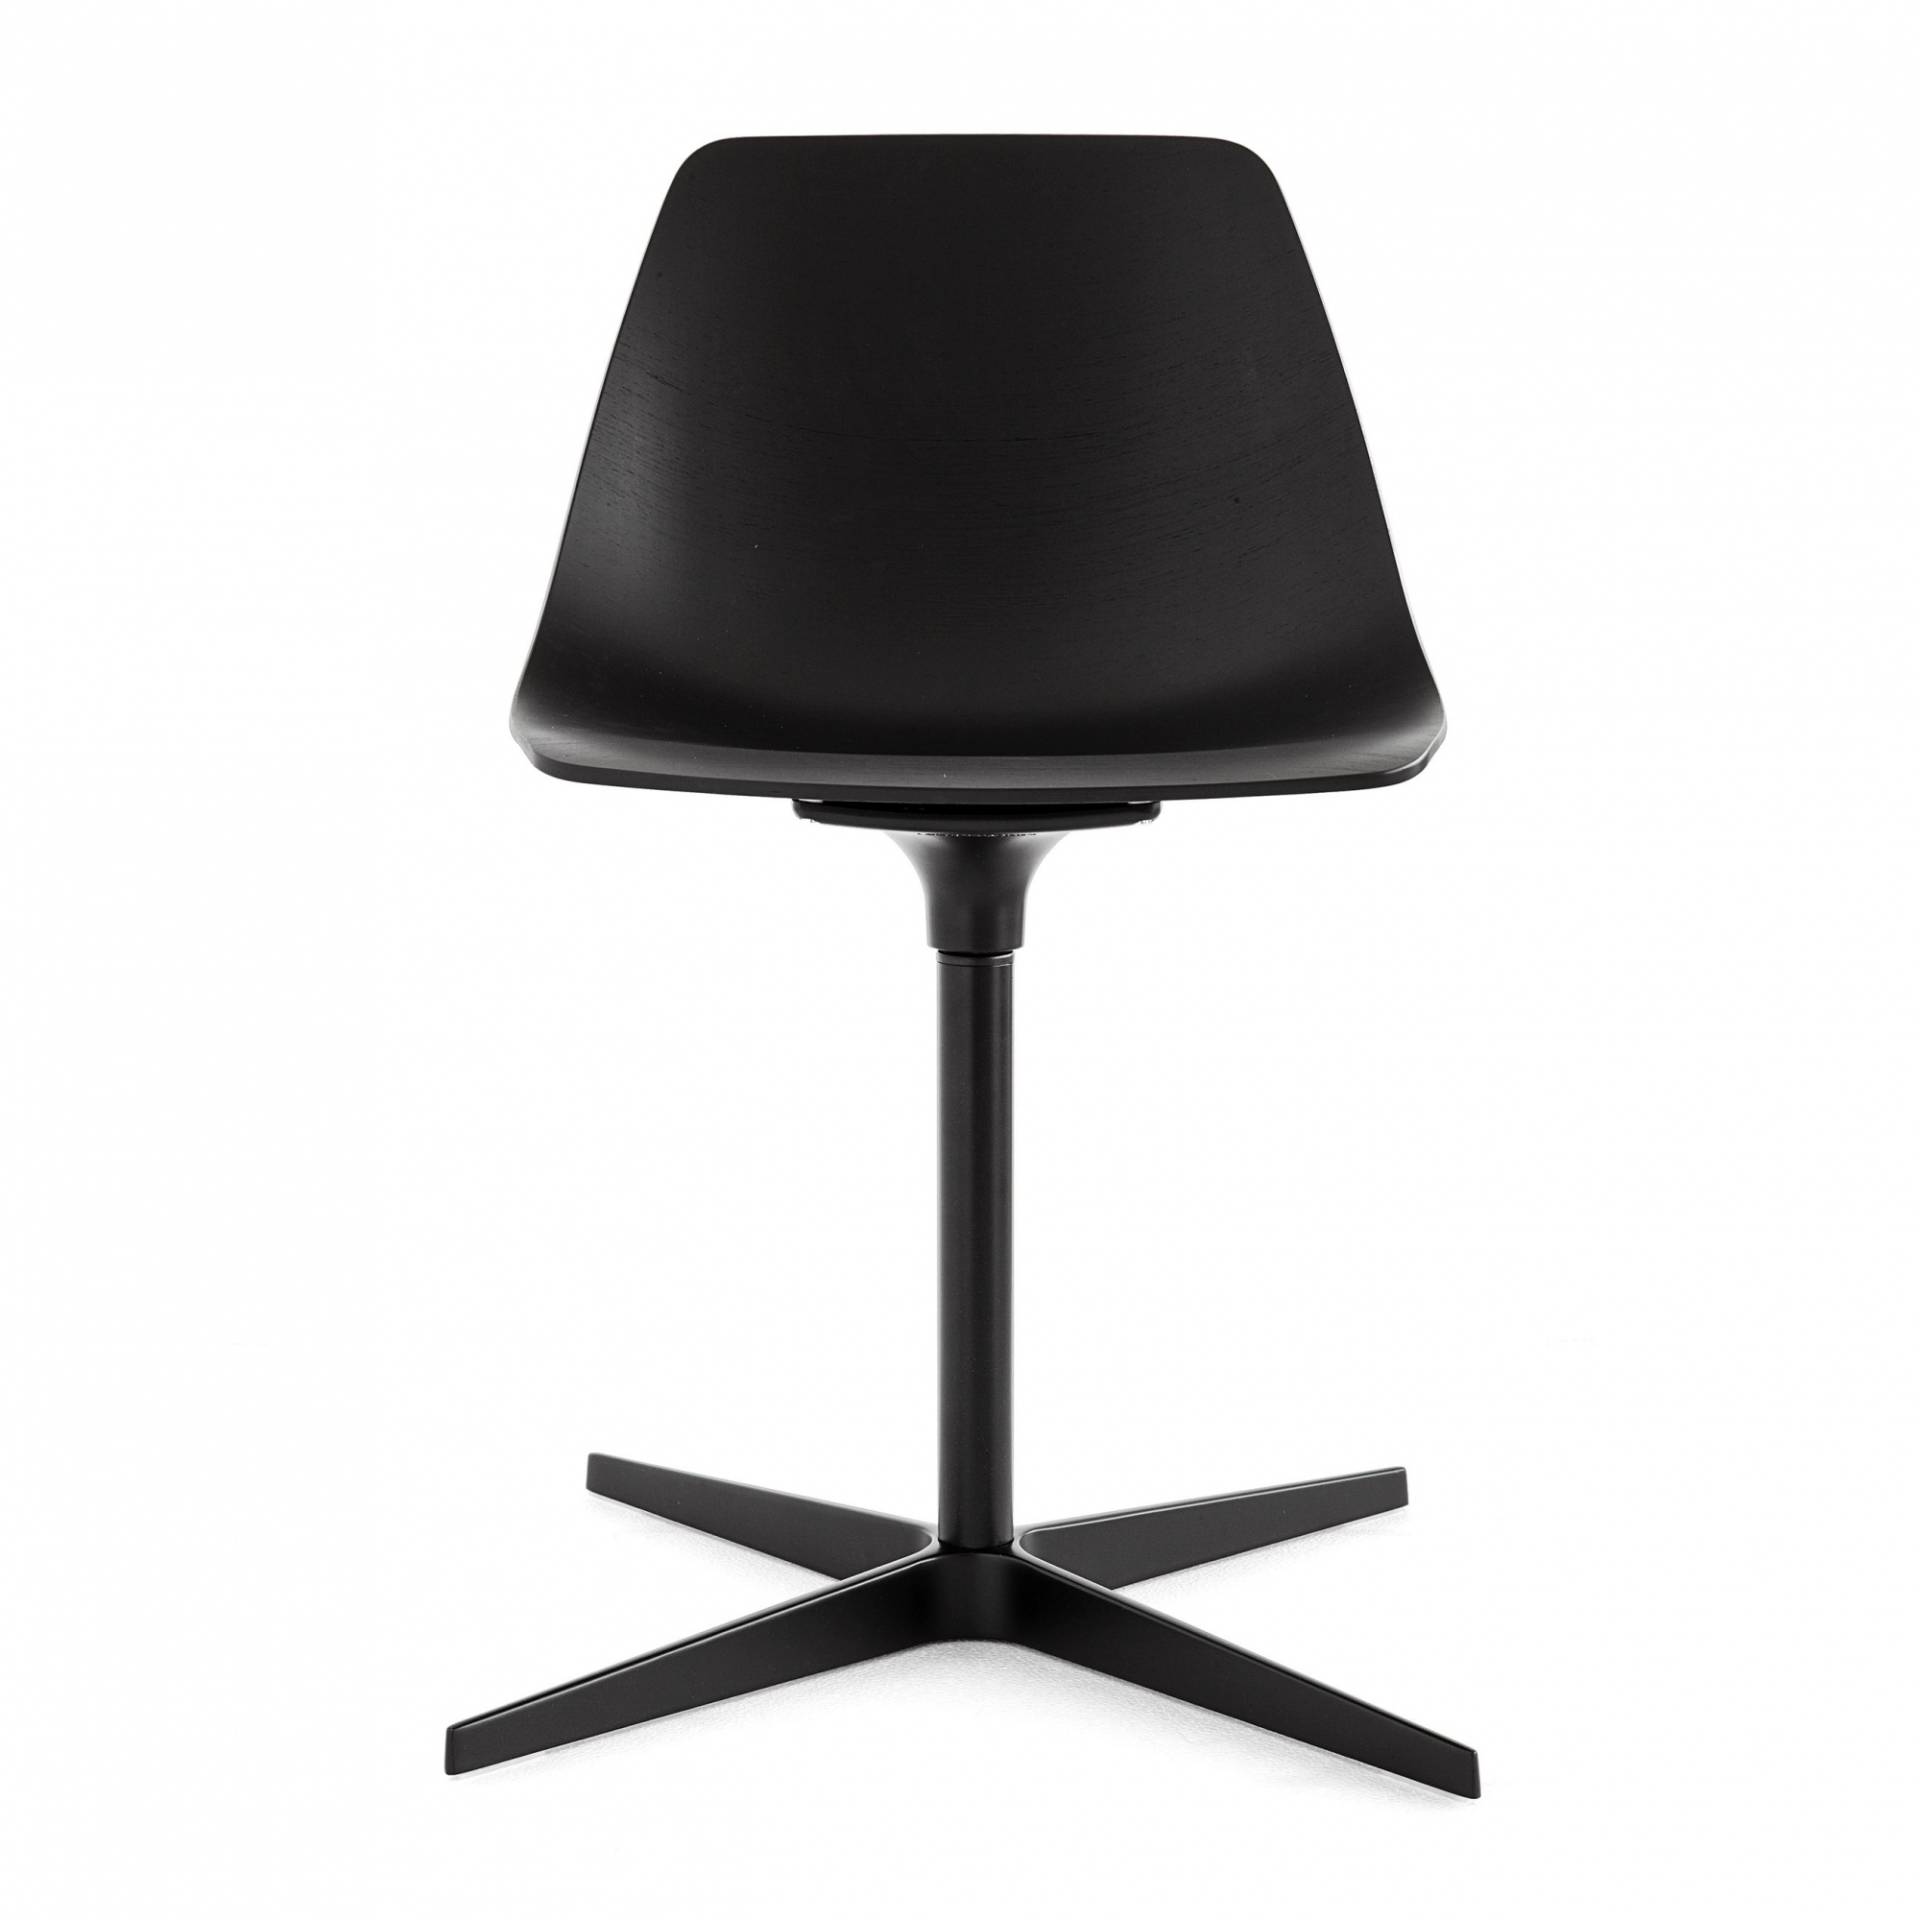 la palma - Miunn S162 Stuhl mit Sternfuß Schwarz - schwarz /offenporig/BxHxT 48x77x51cm/Gestell schwarz lackiert von la palma